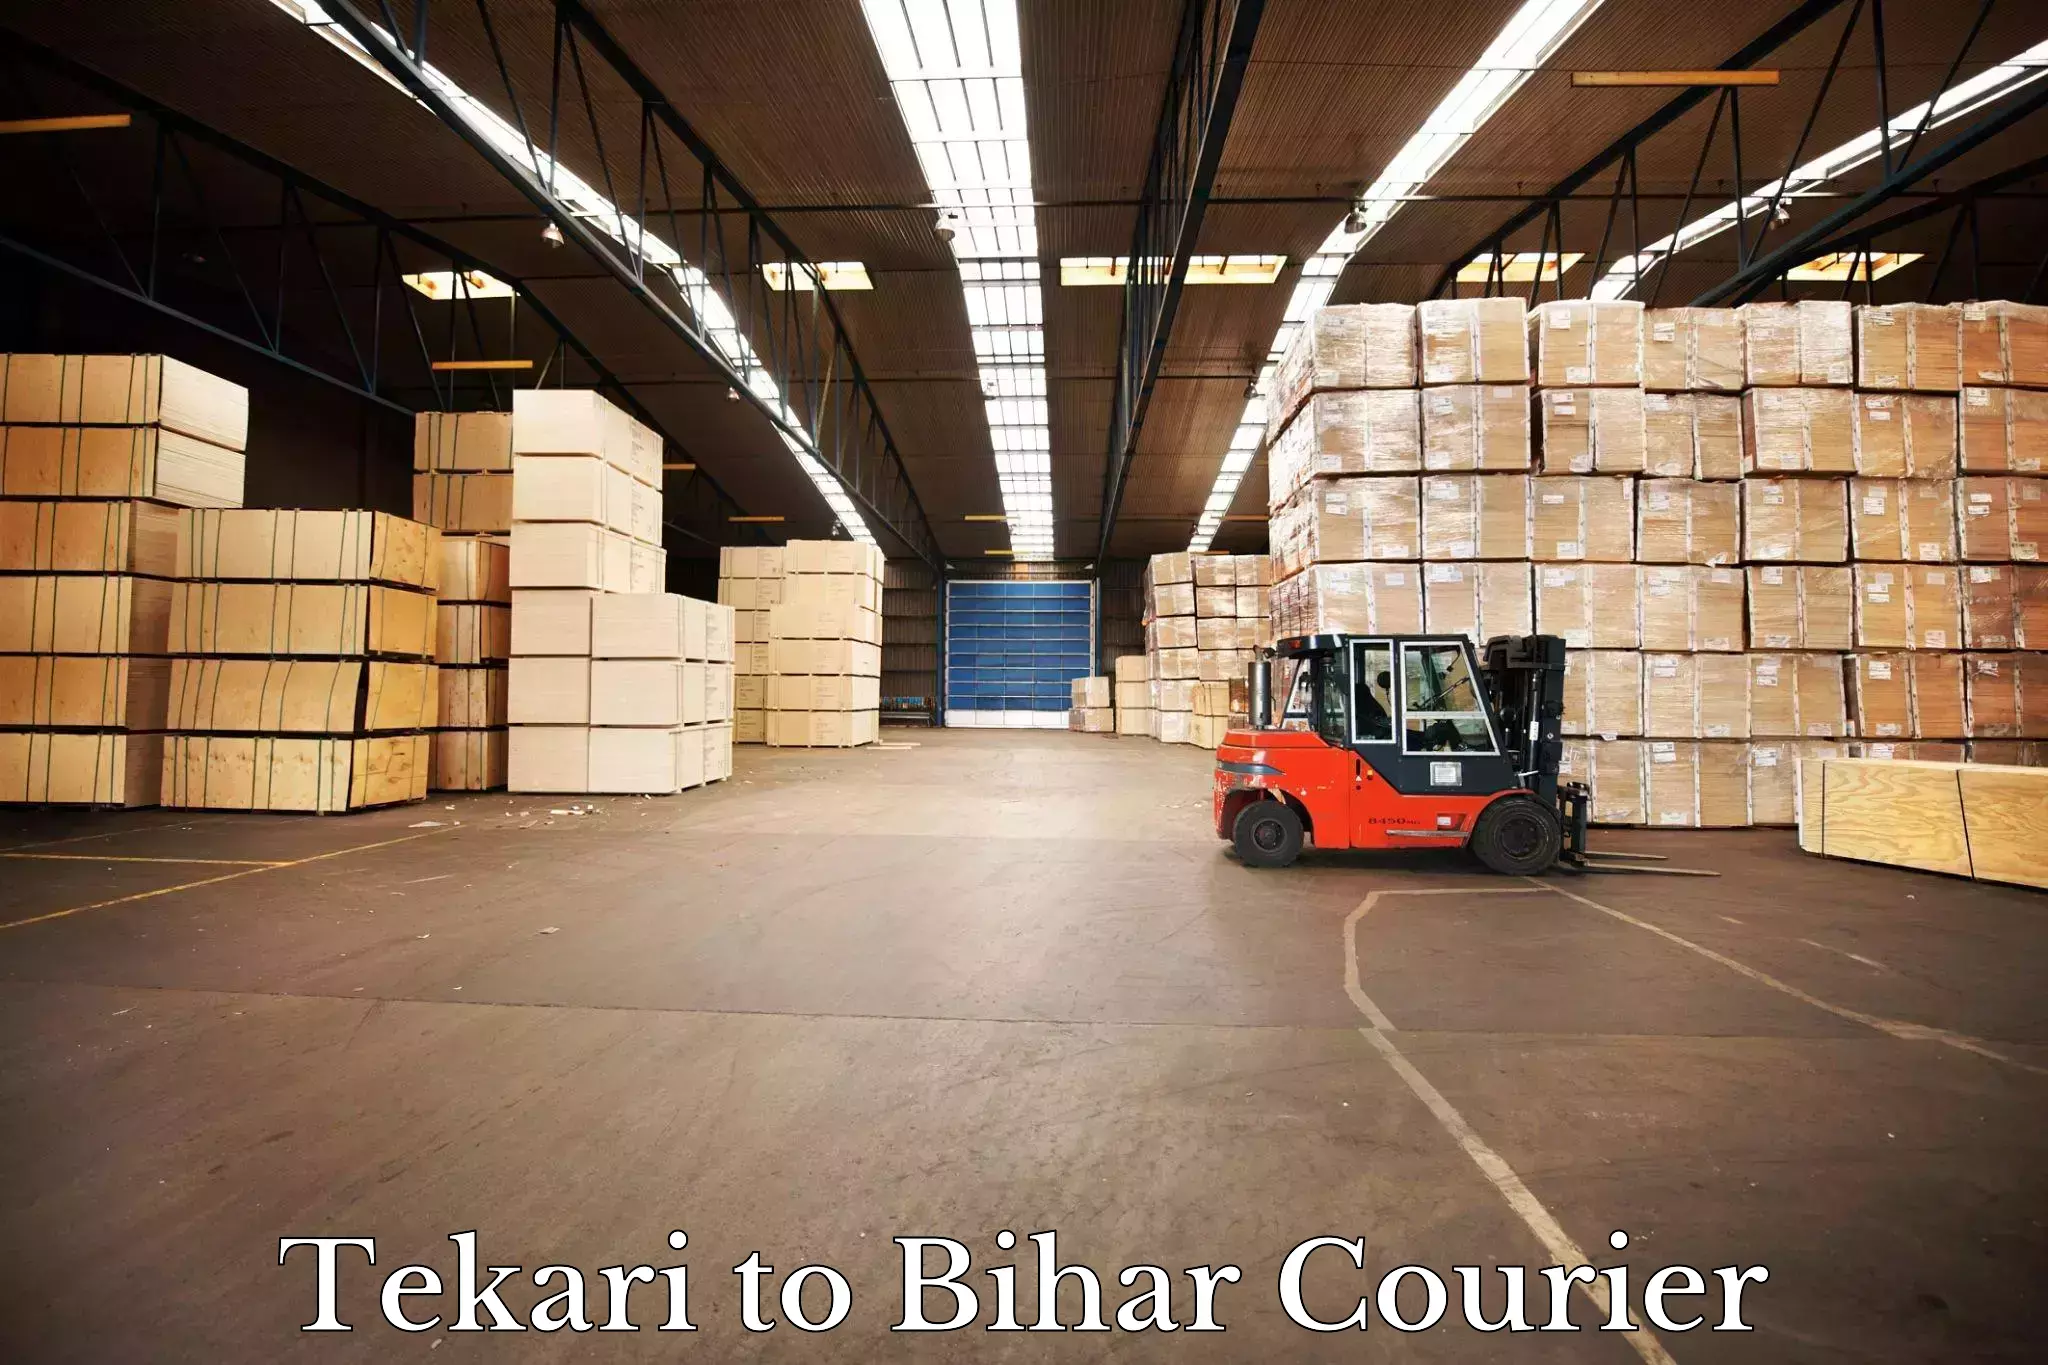 Express delivery capabilities Tekari to Bihar